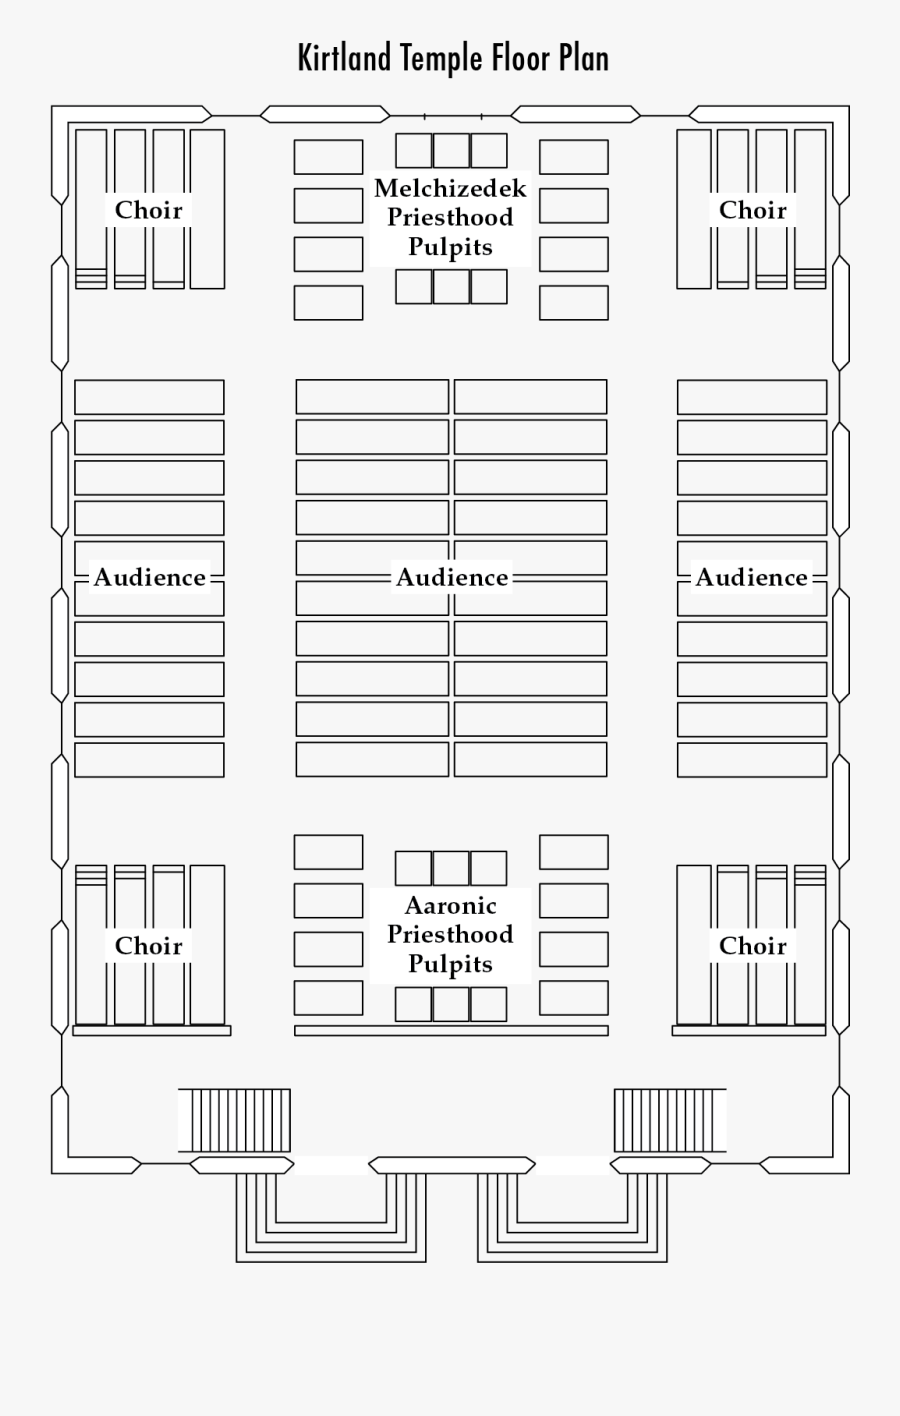 An Outline Of The Main Floor Of The Kirtland Temple - Kirtland Ohio Temple Floorplan, Transparent Clipart